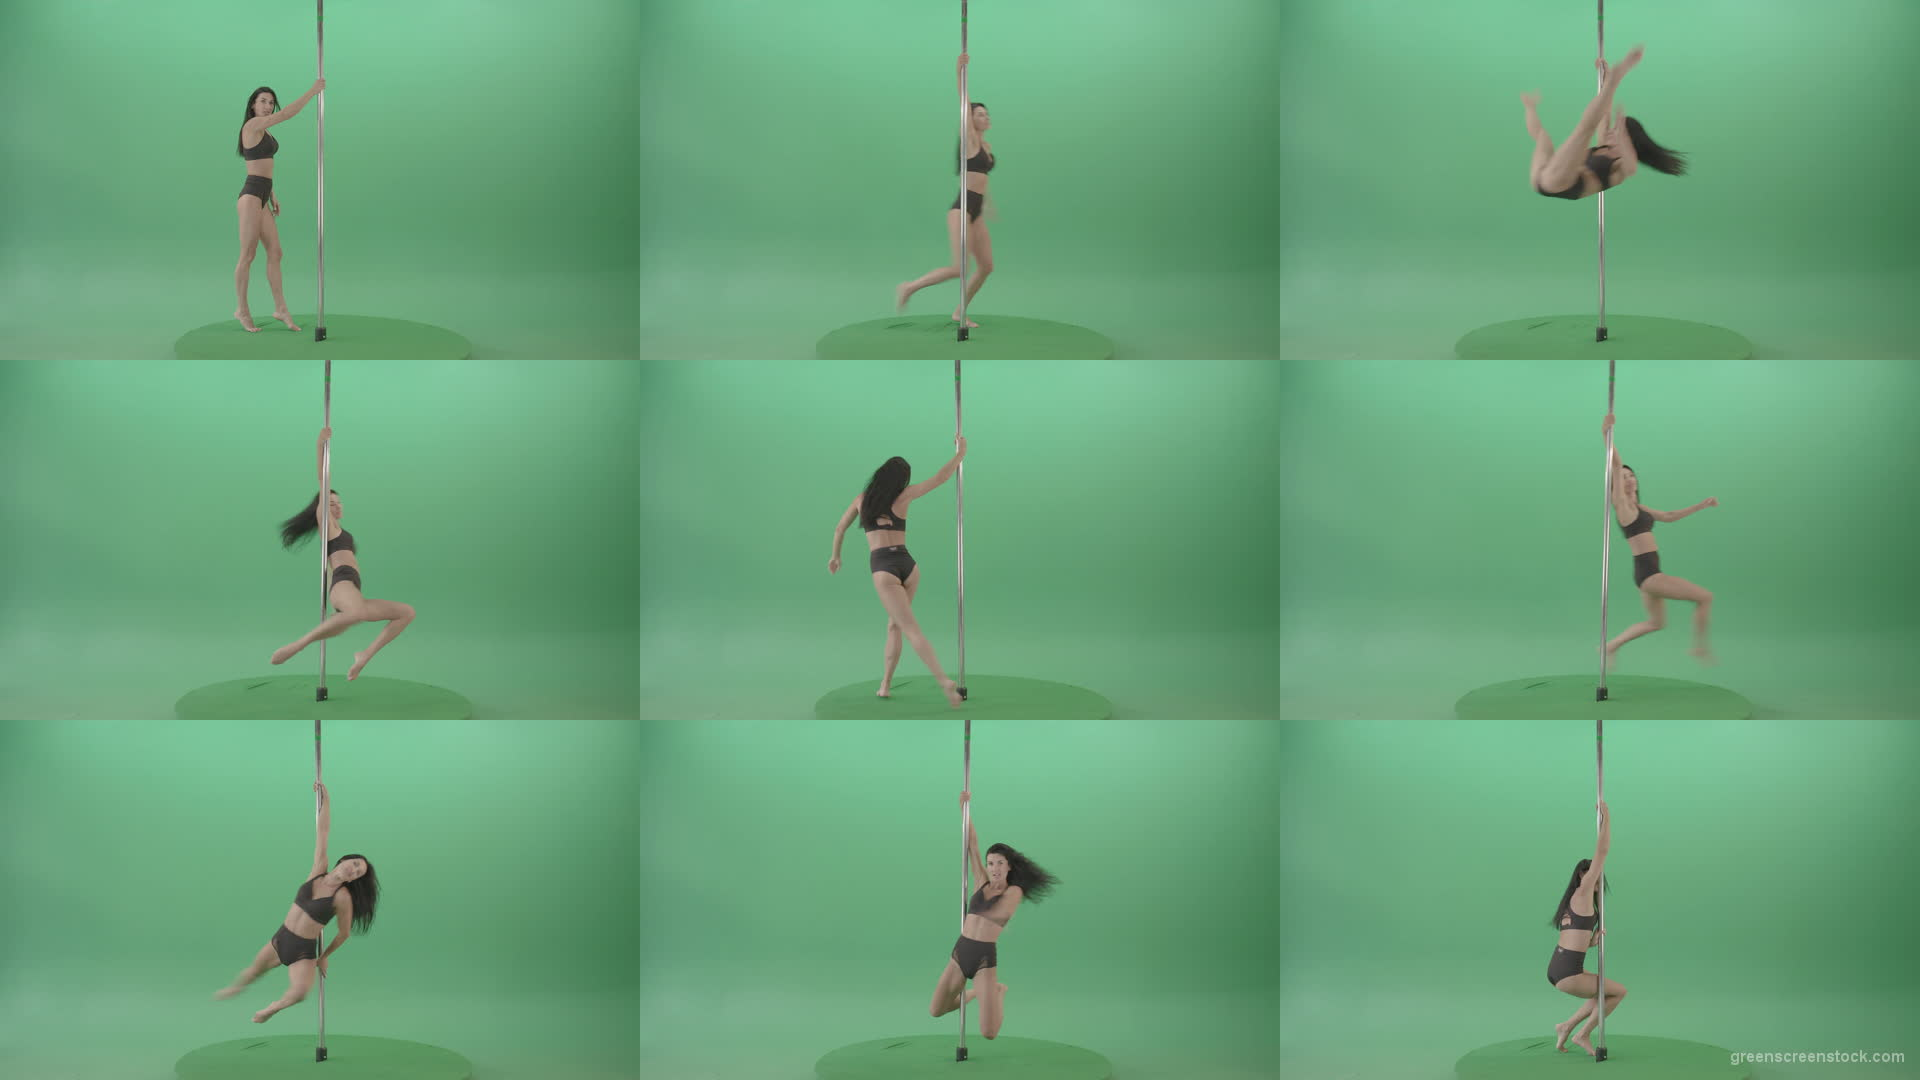 Artistic-gymnast-model-showing-strip-pole-dance-element-on-green-screen-4K-Video-Footage-1920 Green Screen Stock